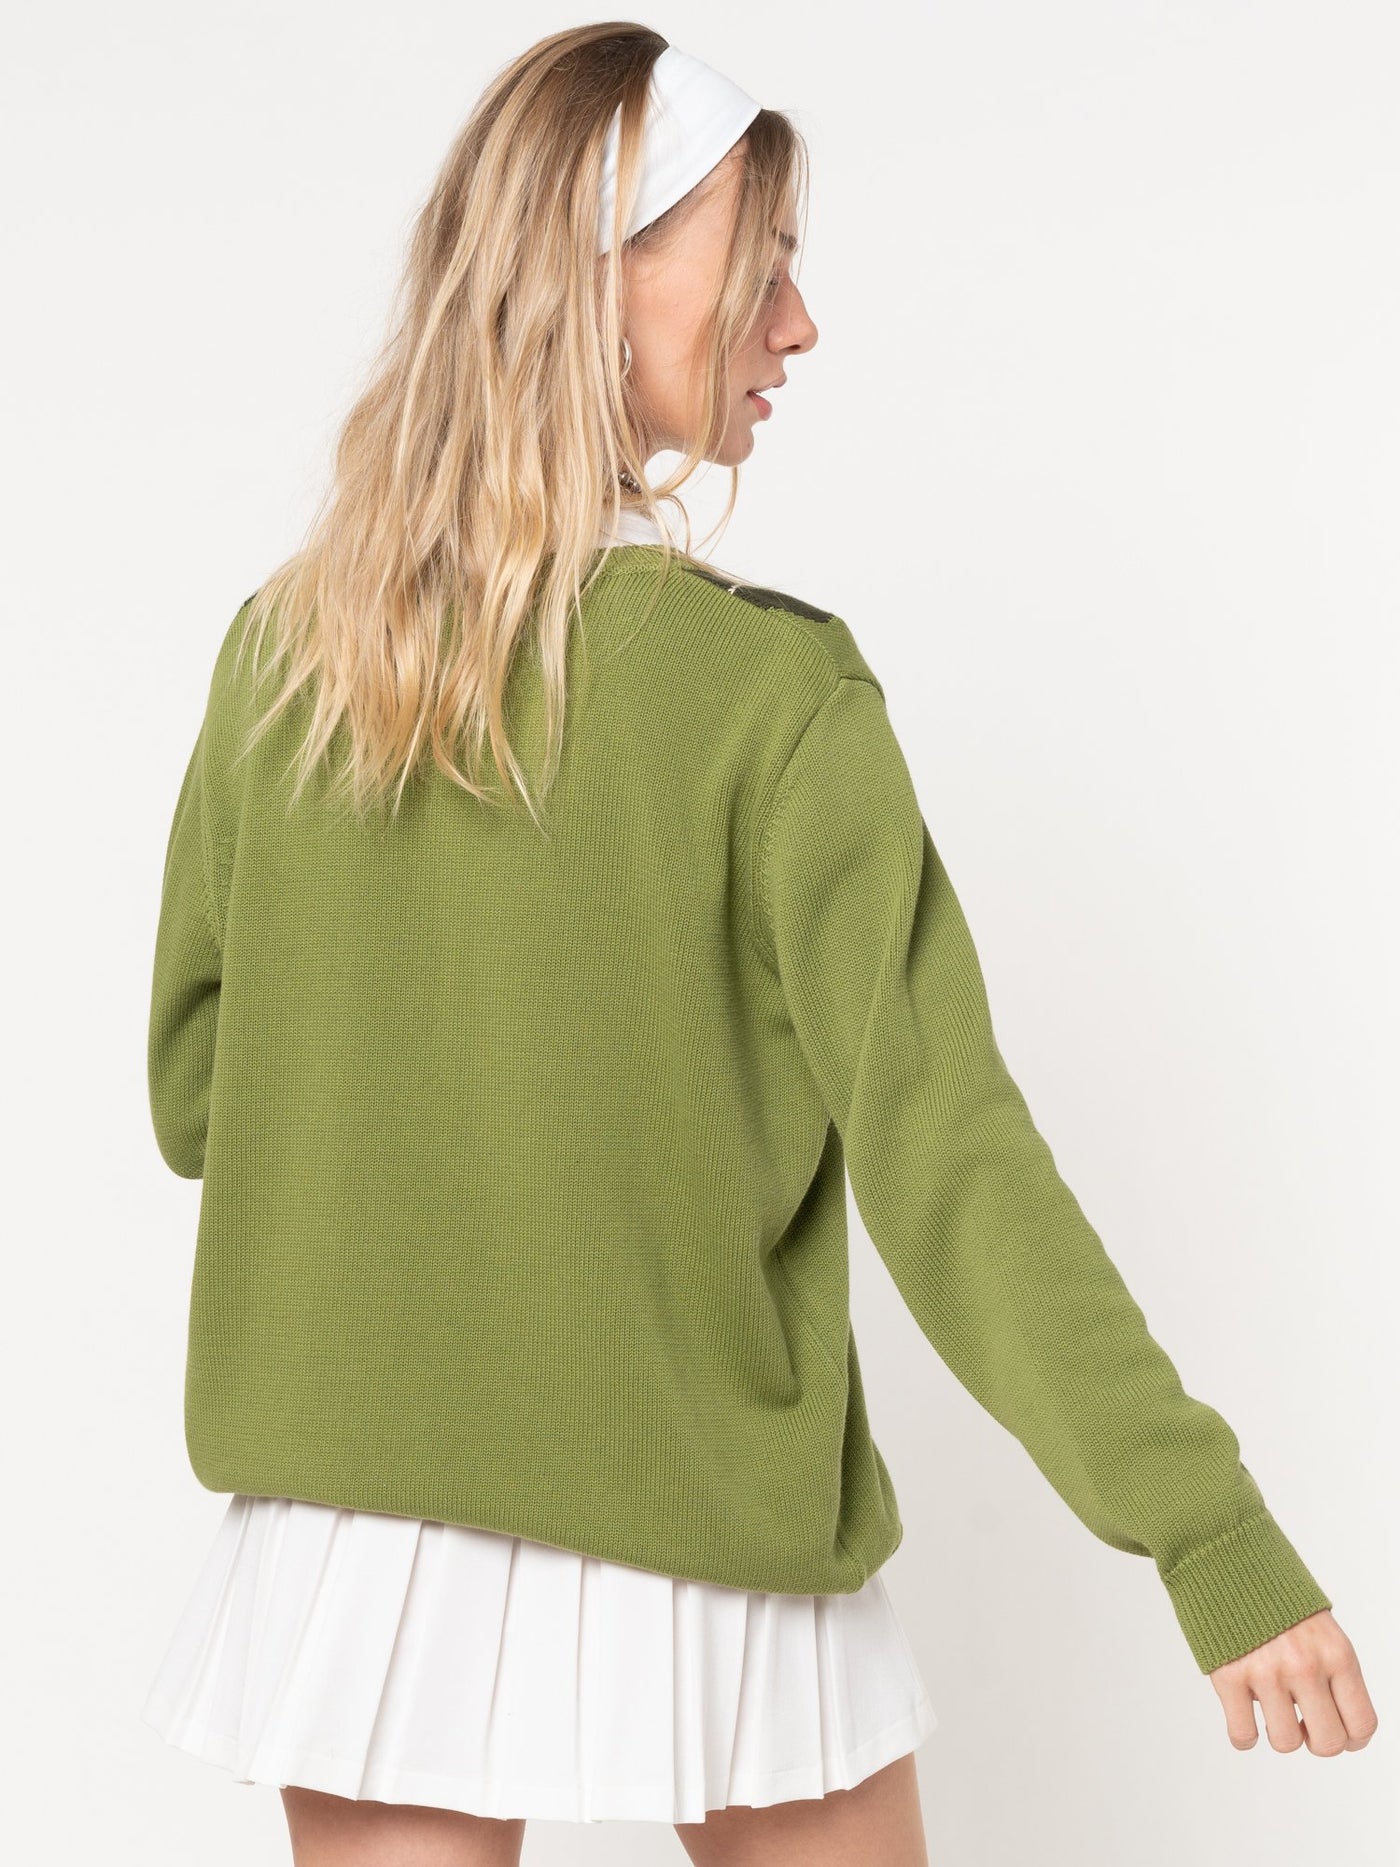 Green Shades Argyle Knitted Jumper